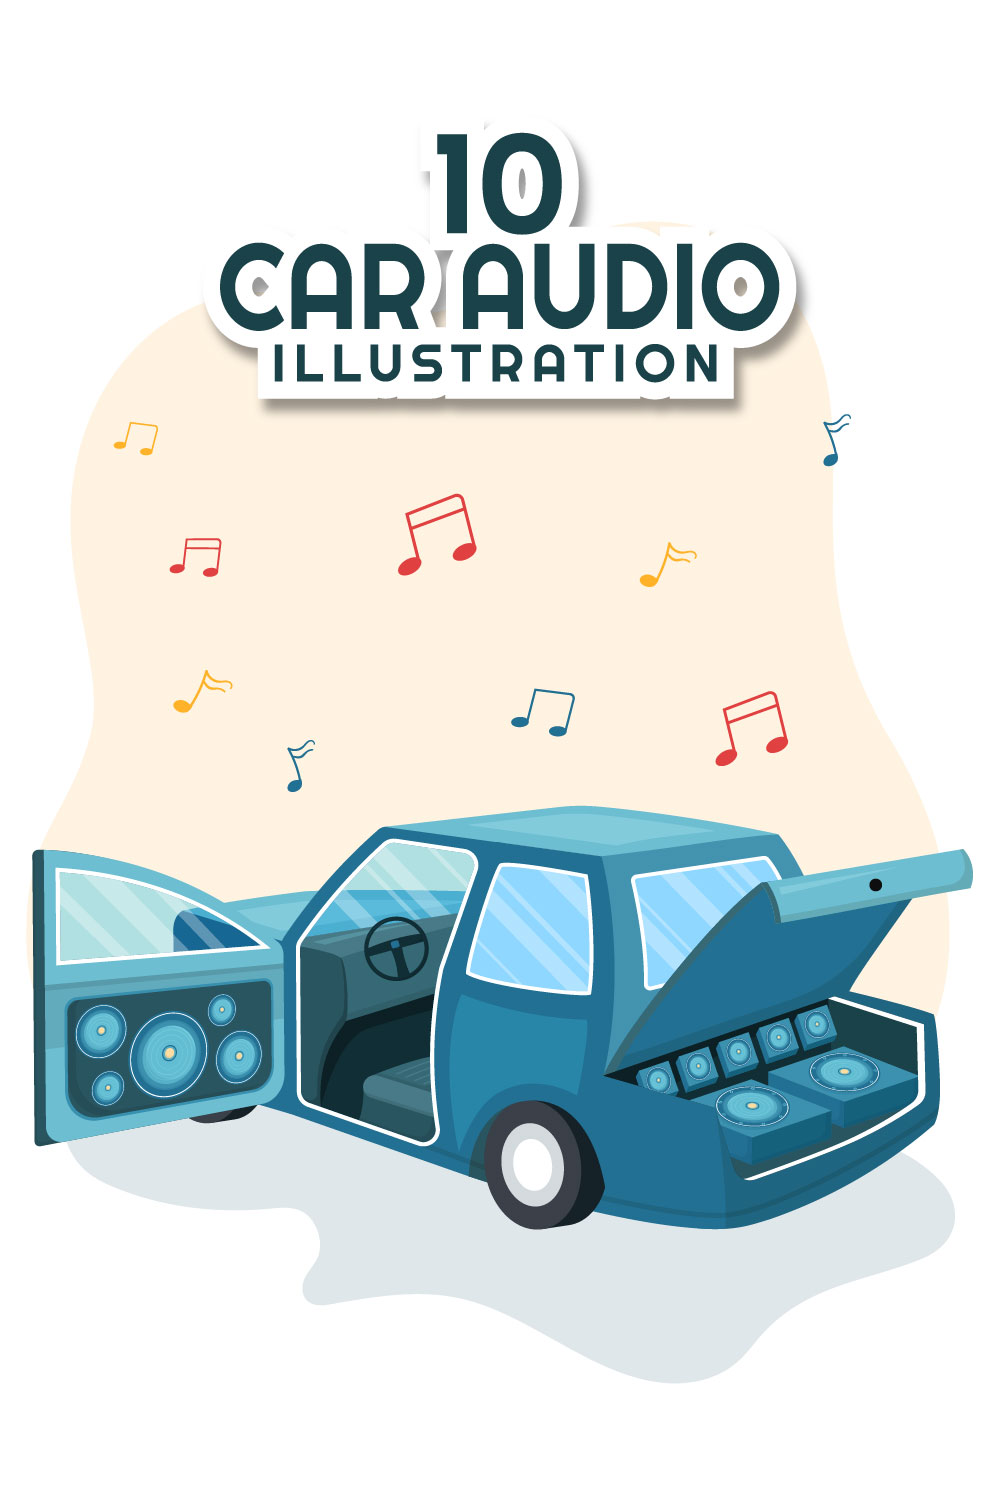 Car Audio Illustration pinterest image.